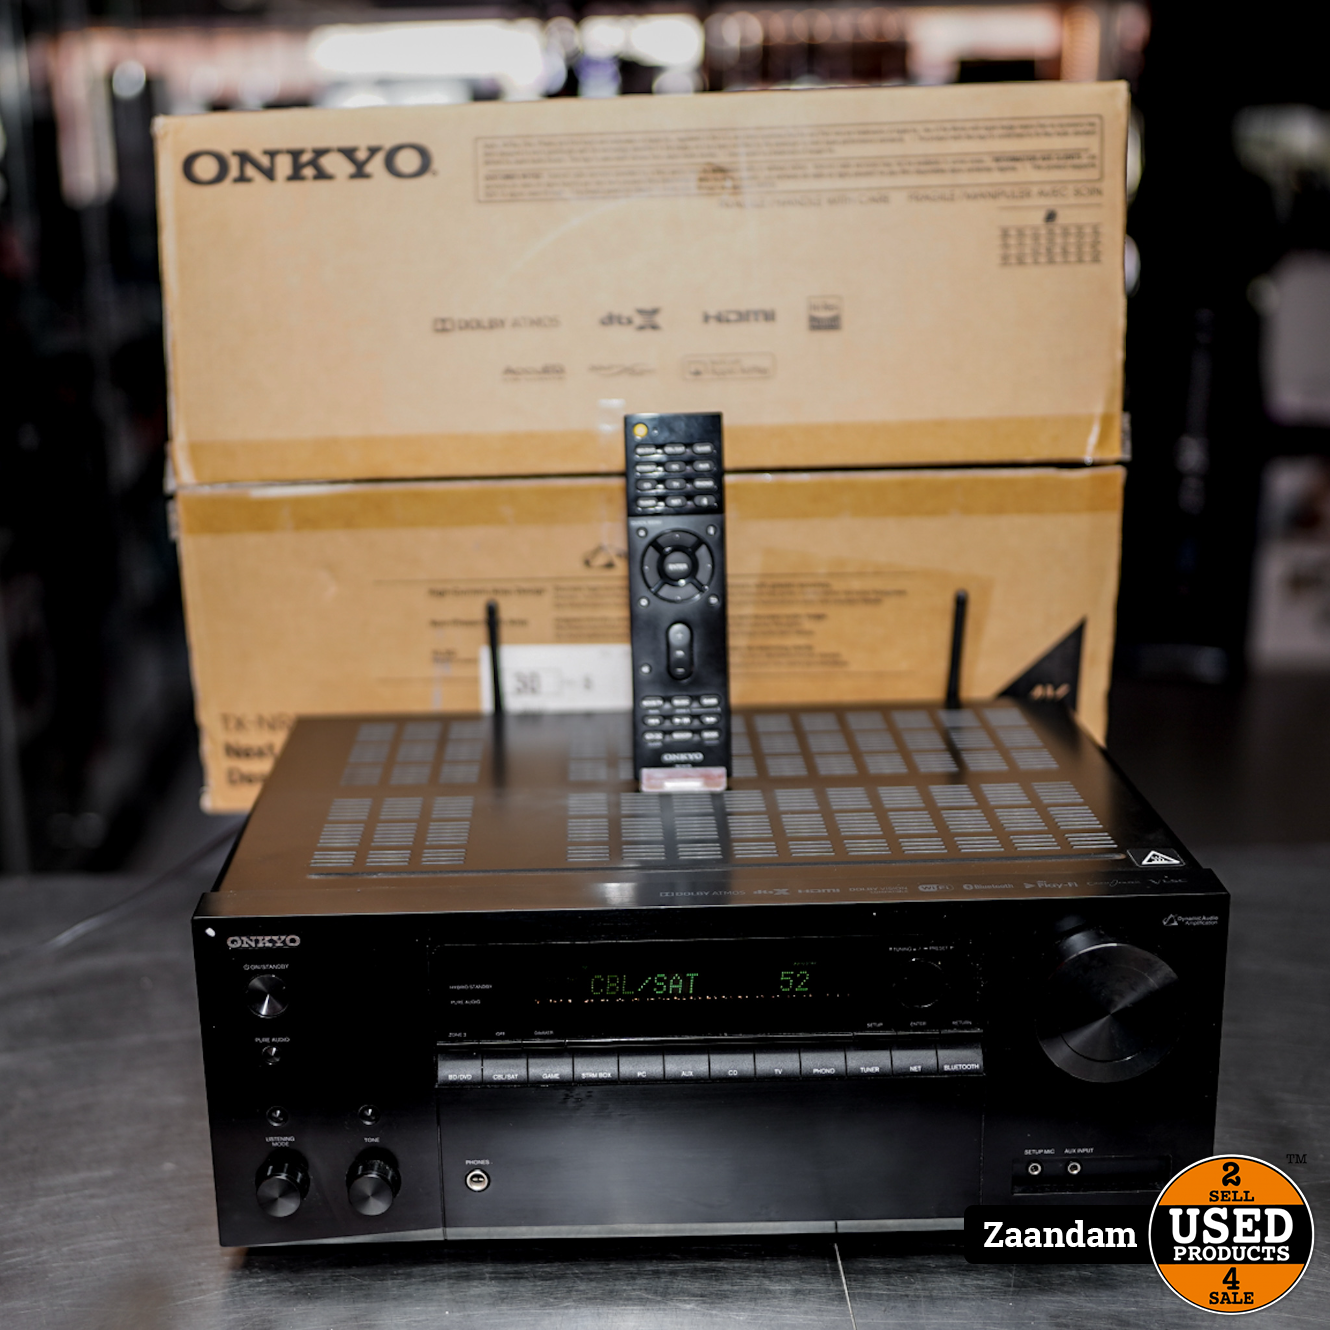 Onkyo TX-NR575E 7.2 Kanaals Versterker | HDMI | USB | Ethernet | Internet | Nette staat doos - Used Products Zaandam